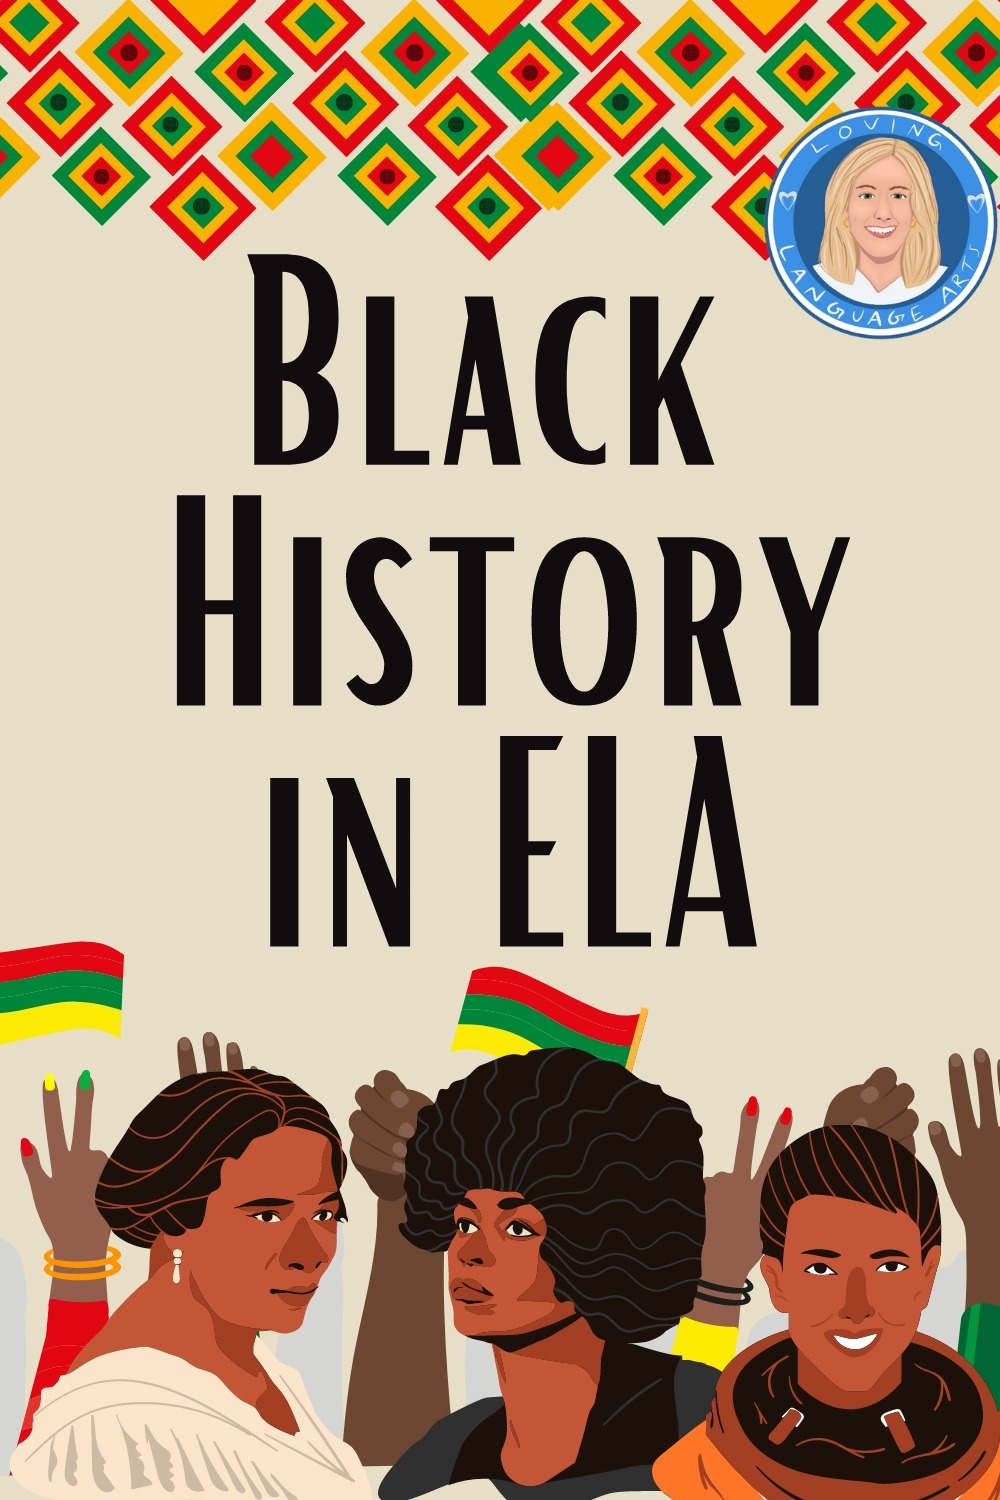 Black History in ELA blog post pin